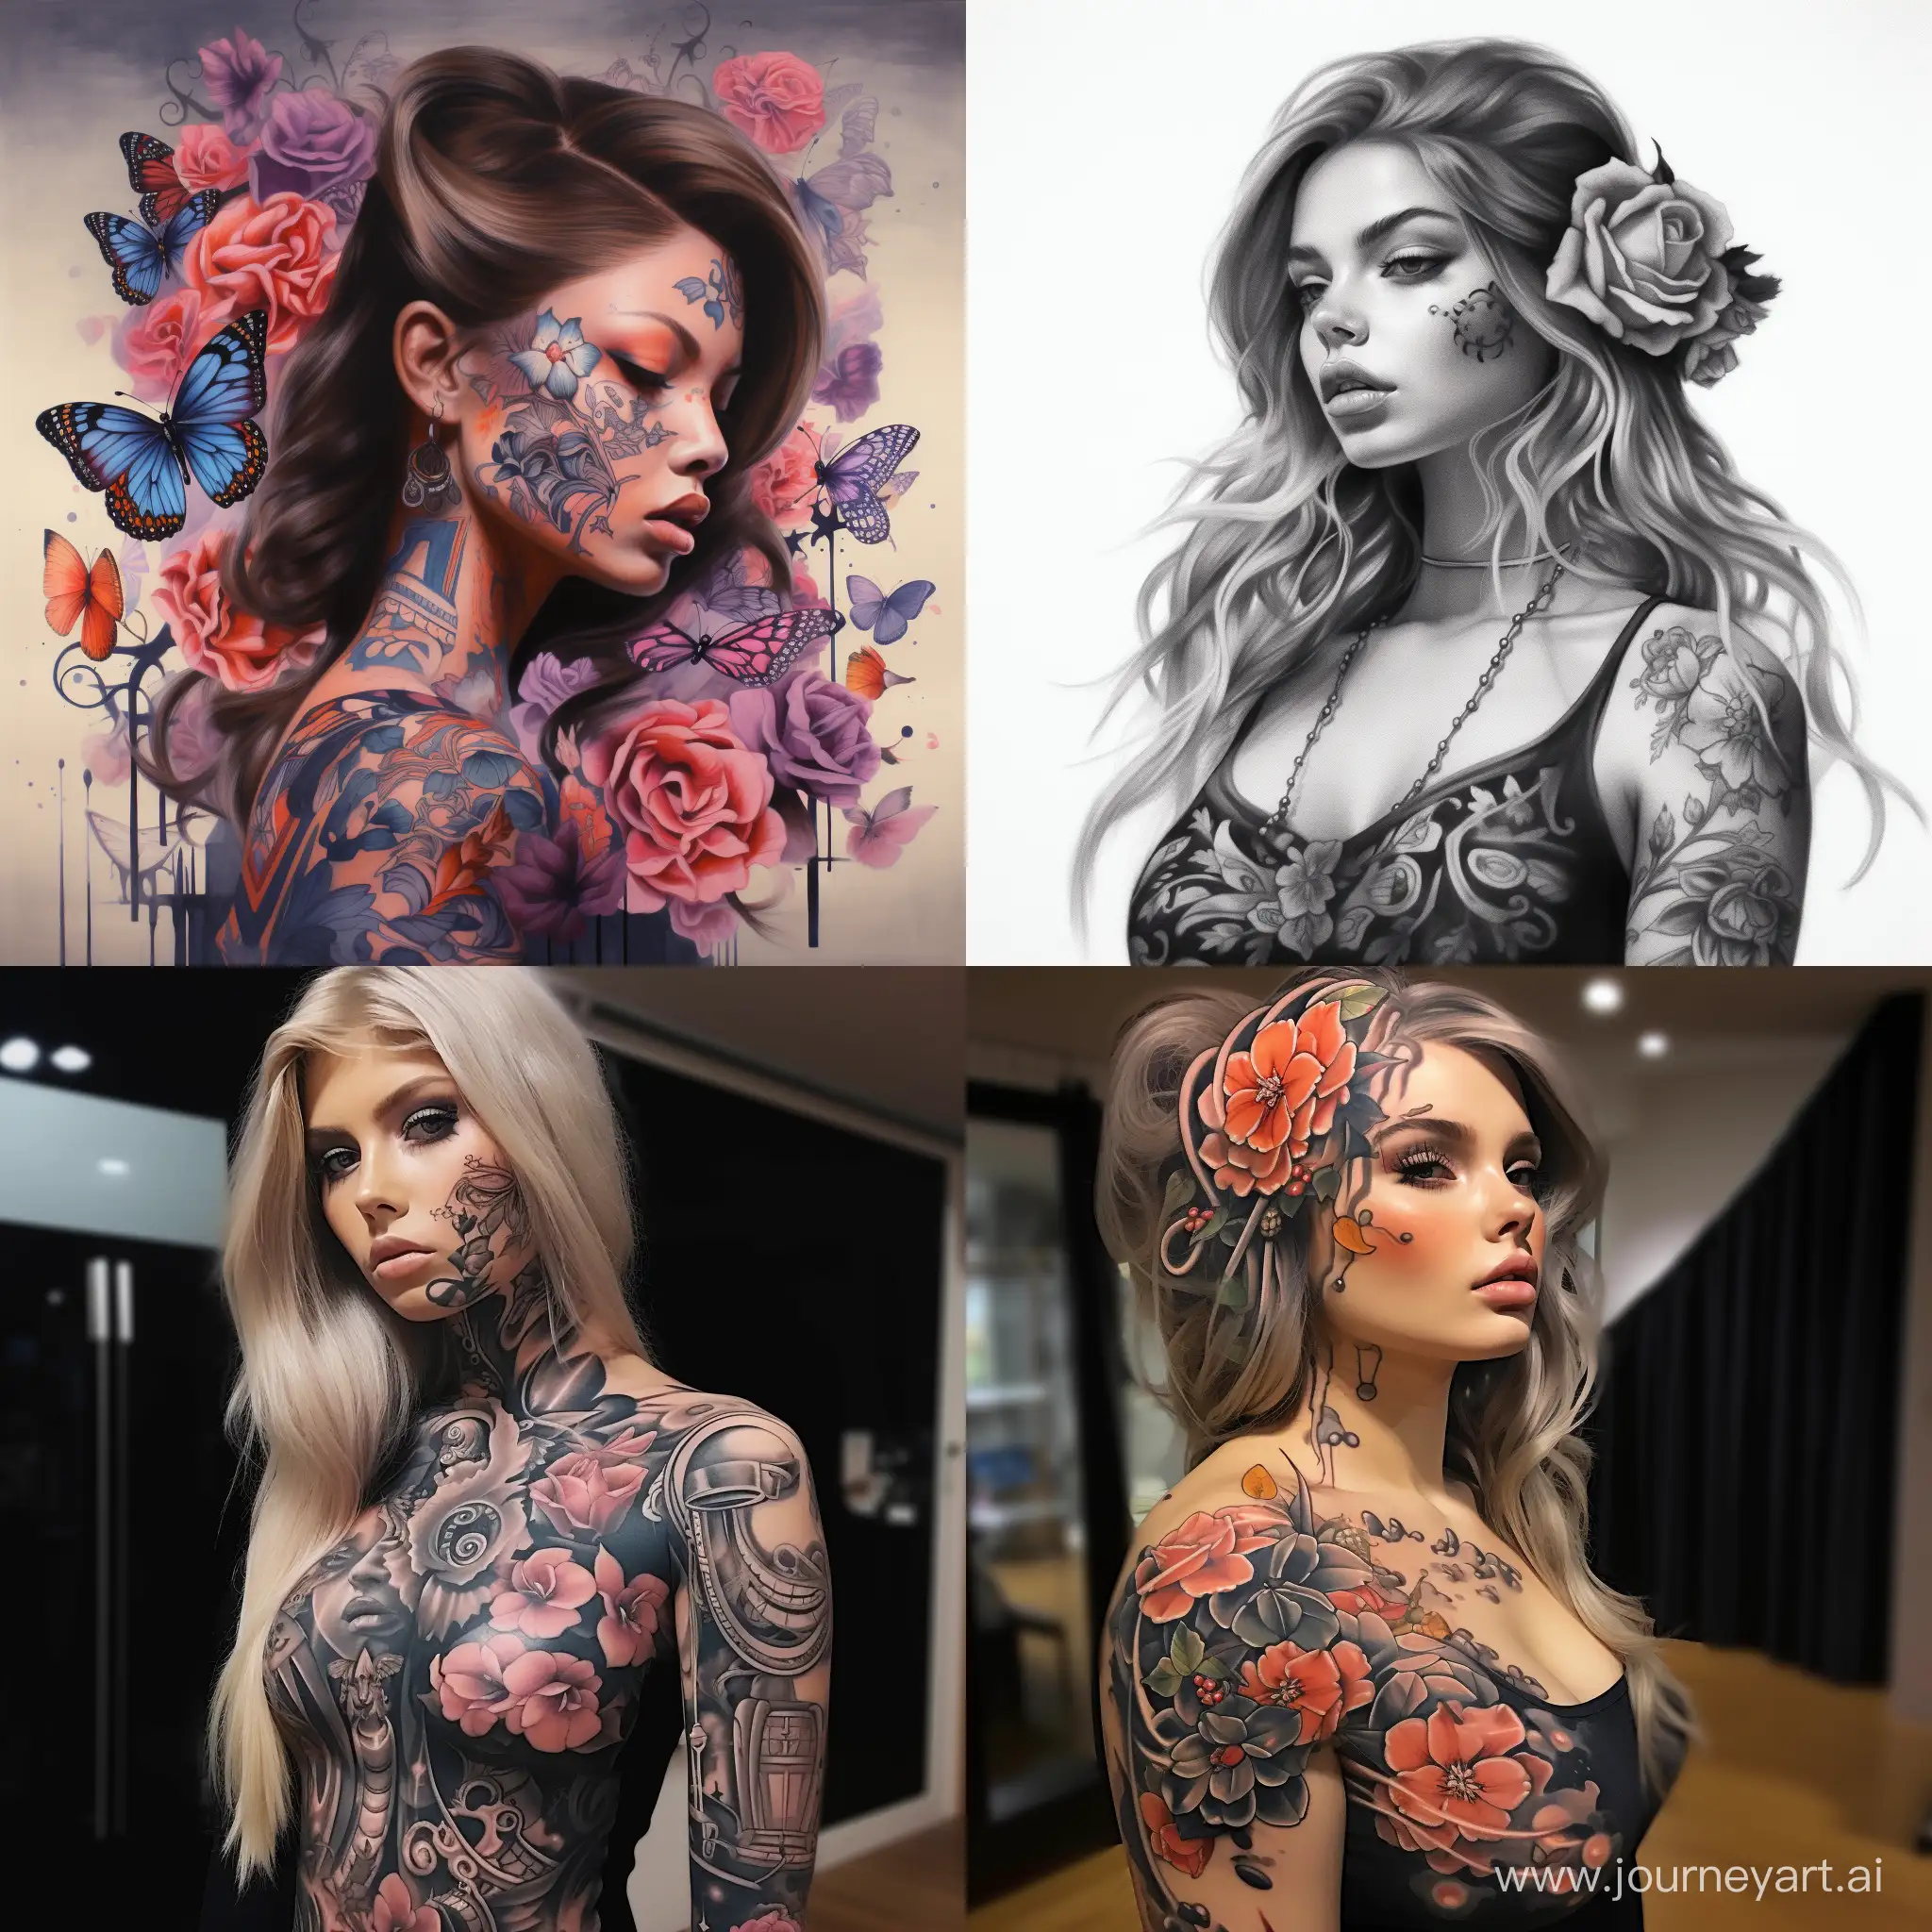 Stunning-Tattooed-Woman-in-Square-Aspect-Ratio